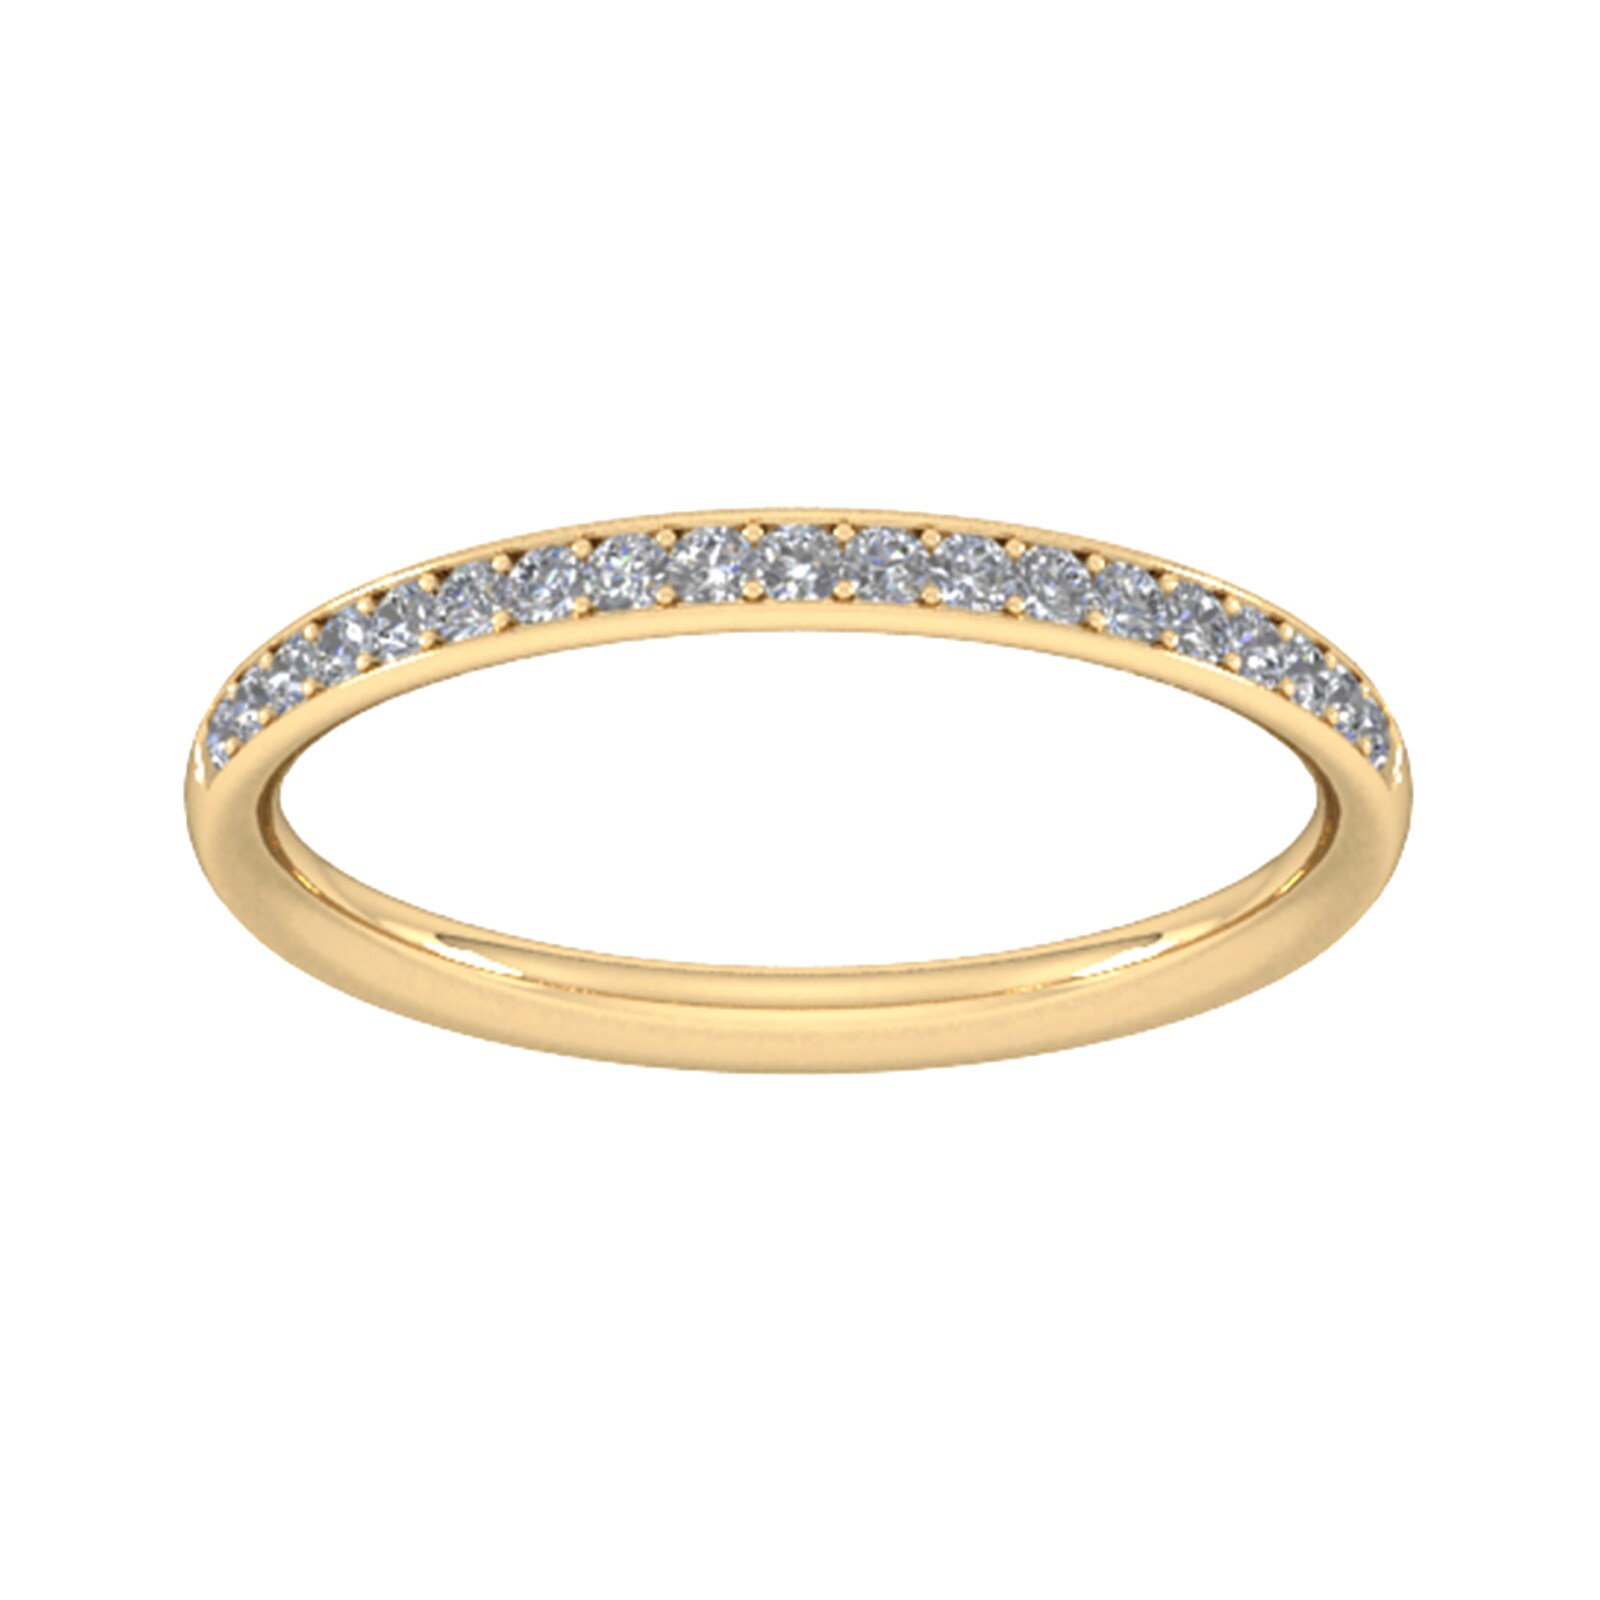 0.18 Carat Total Weight Brilliant Cut Grain Set Diamond Wedding Ring In 18 Carat Yellow Gold - Ring Size R